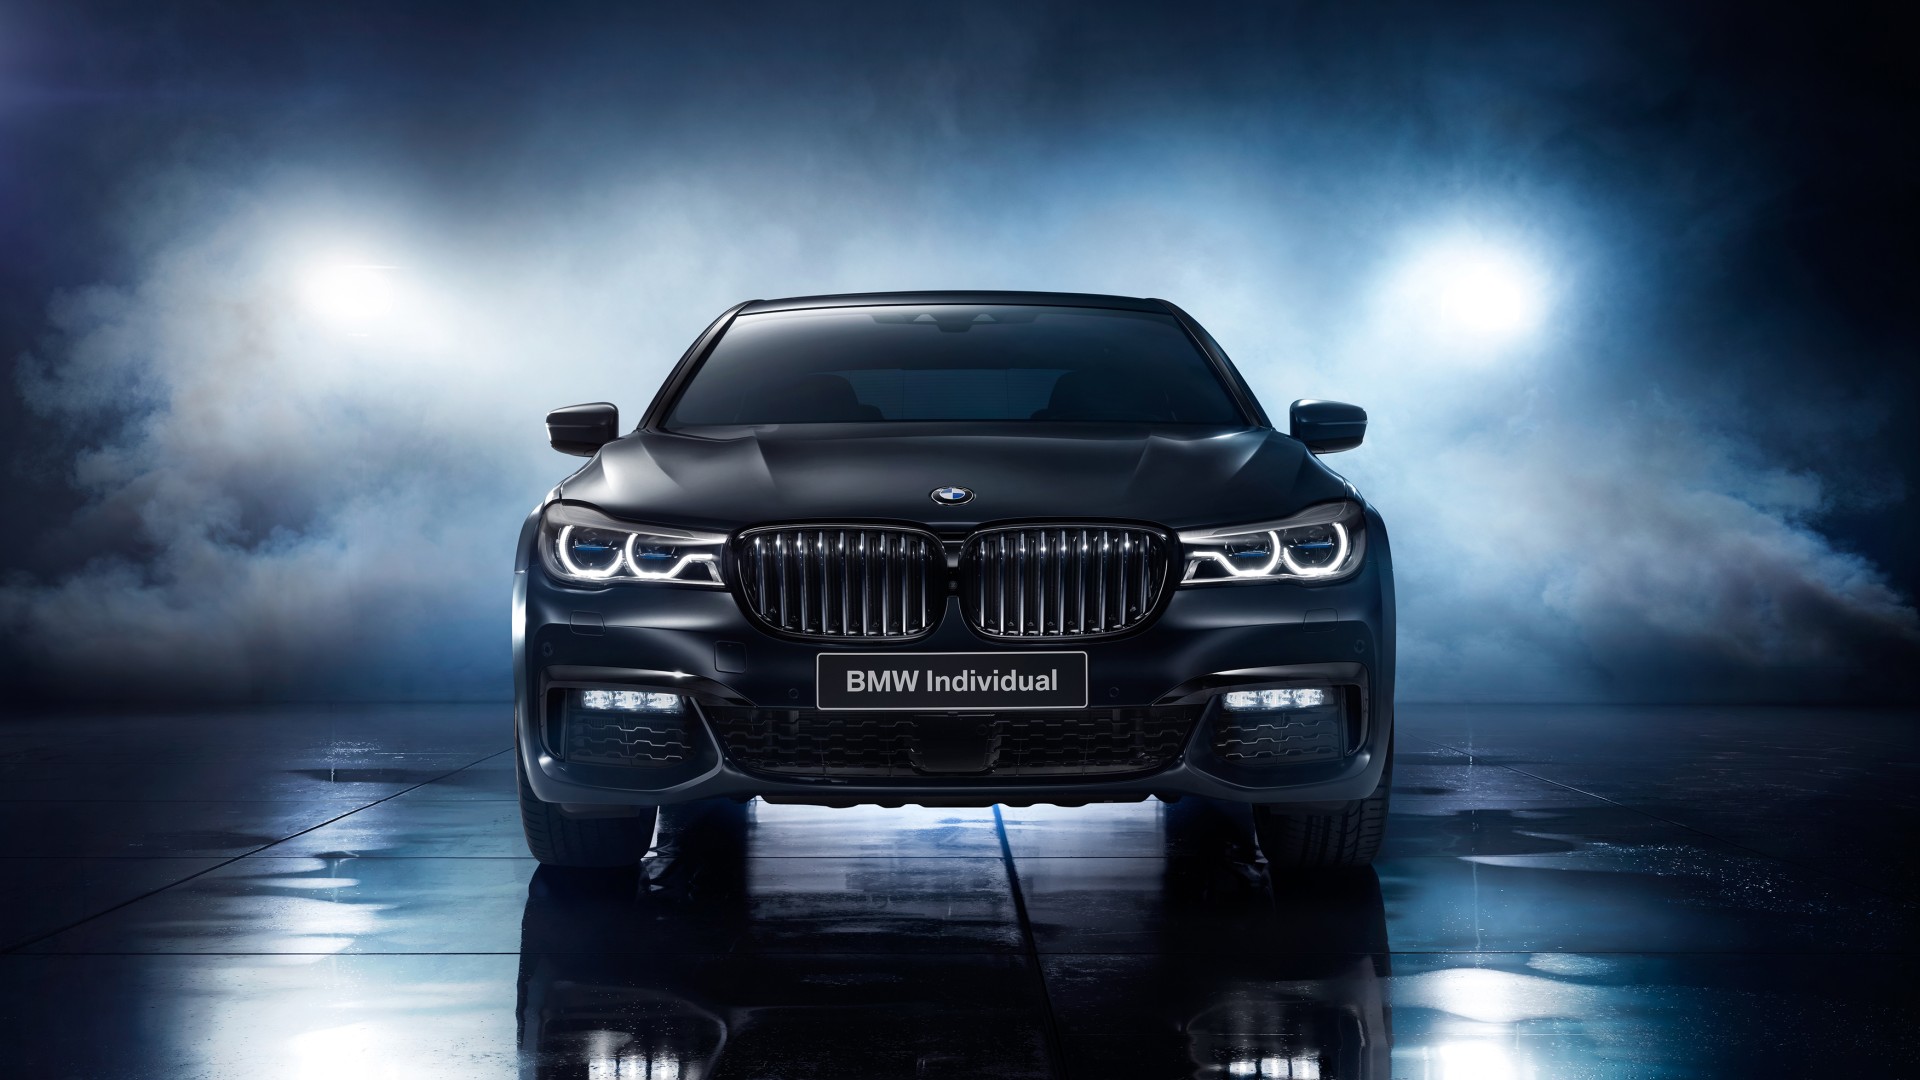 2017 BMW 7 series Black Ice Edition Wallpaper | HD Car ...